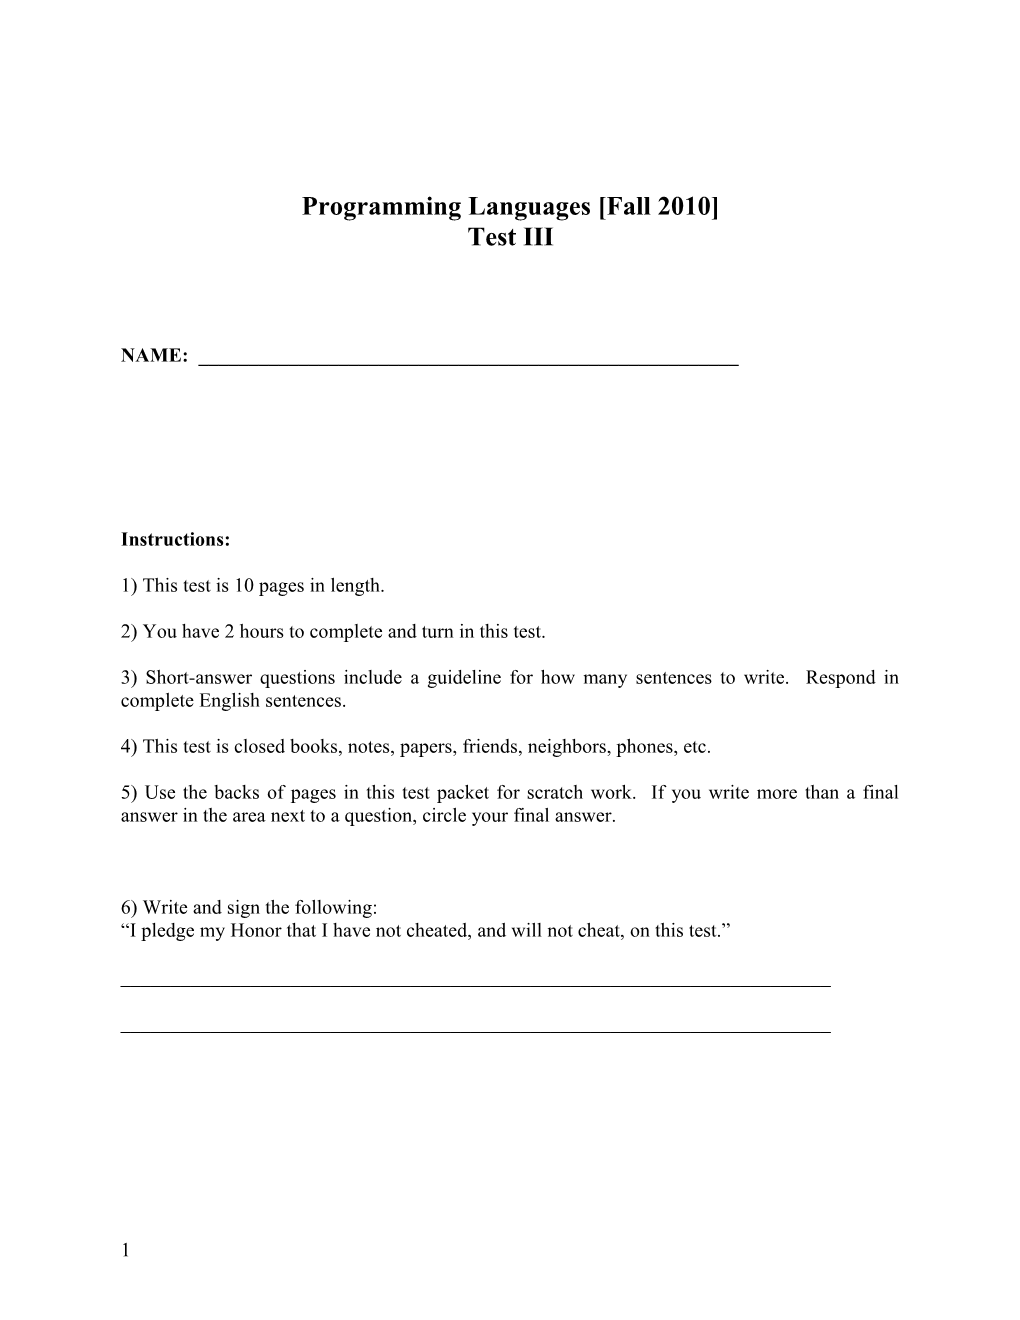 Programming Languages Fall 2010